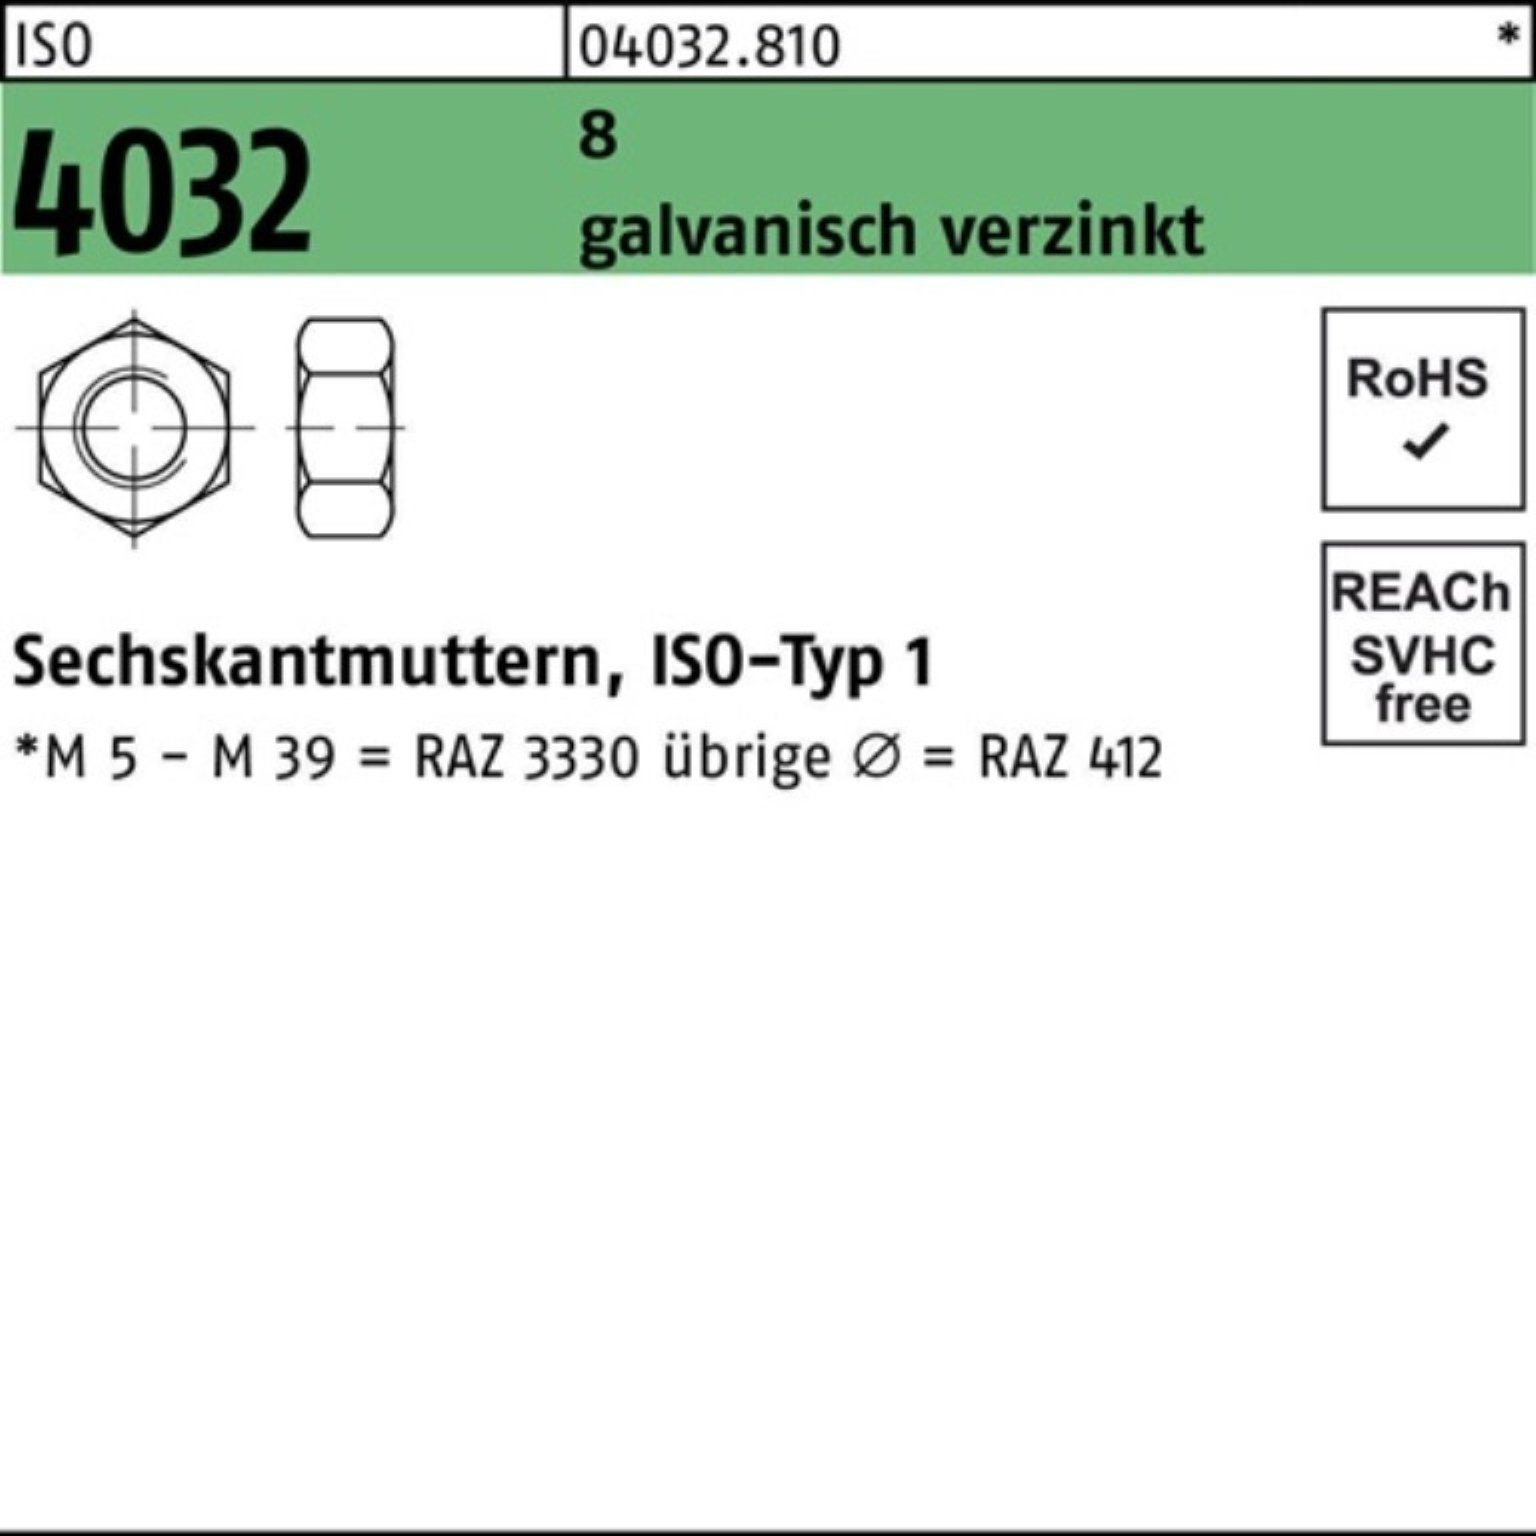 M12 500er Sechskantmutter Muttern 8 galv.verz. 4032 ISO Bufab Stück 40 ISO Pack 500